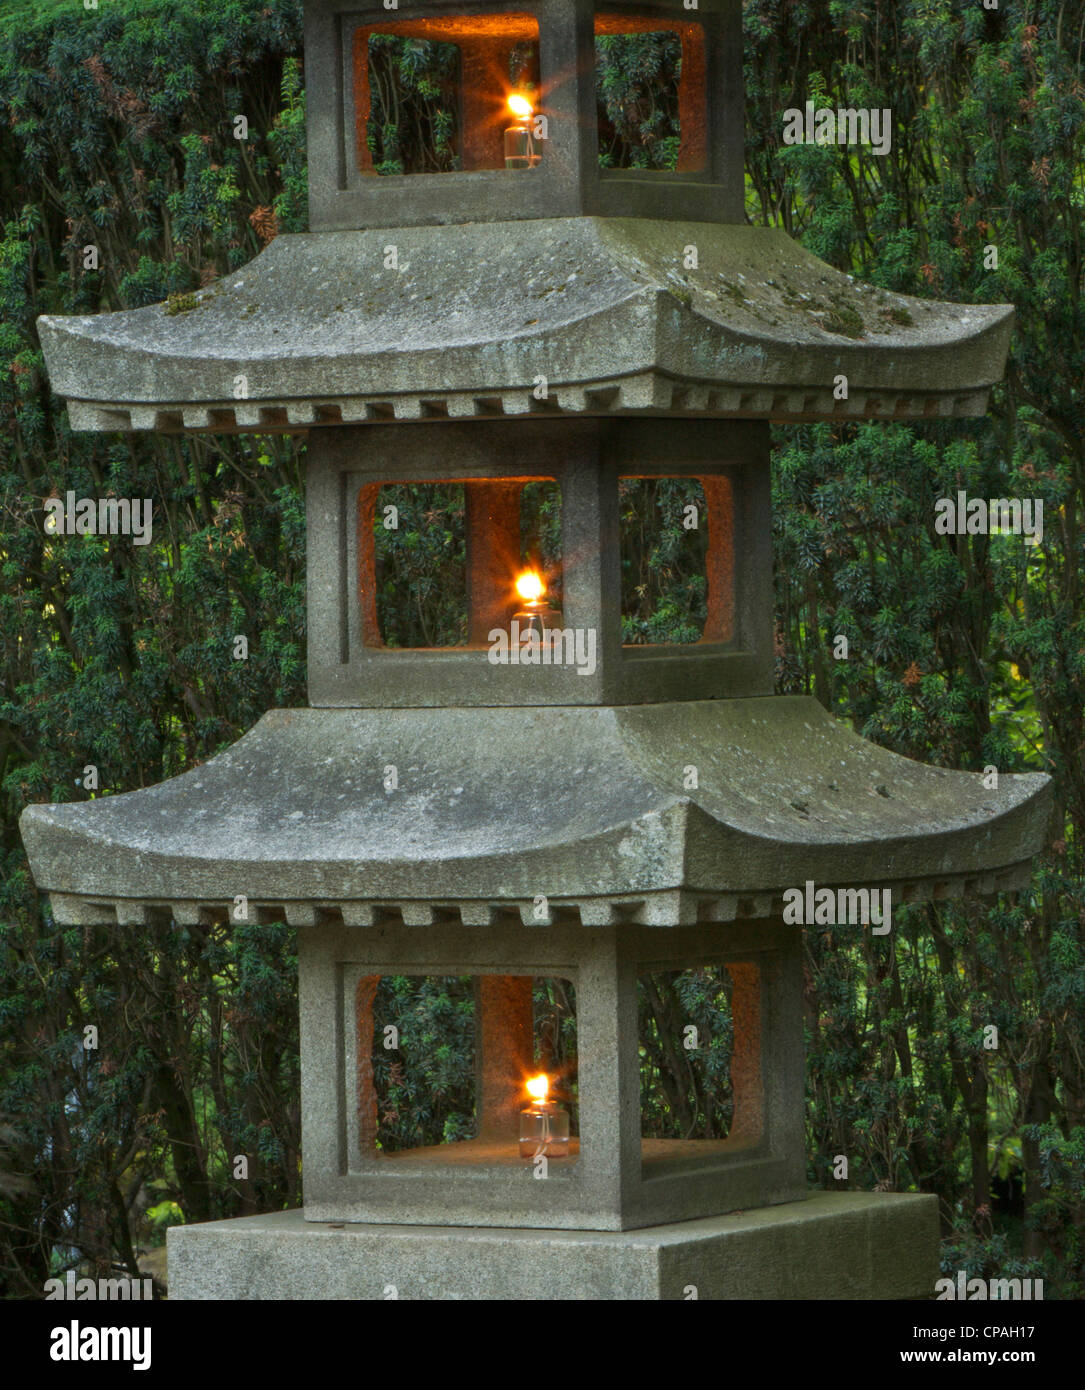 illuminated-stone-pagoda-lantern-in-portland-japanese-garden-CPAH17.jpg